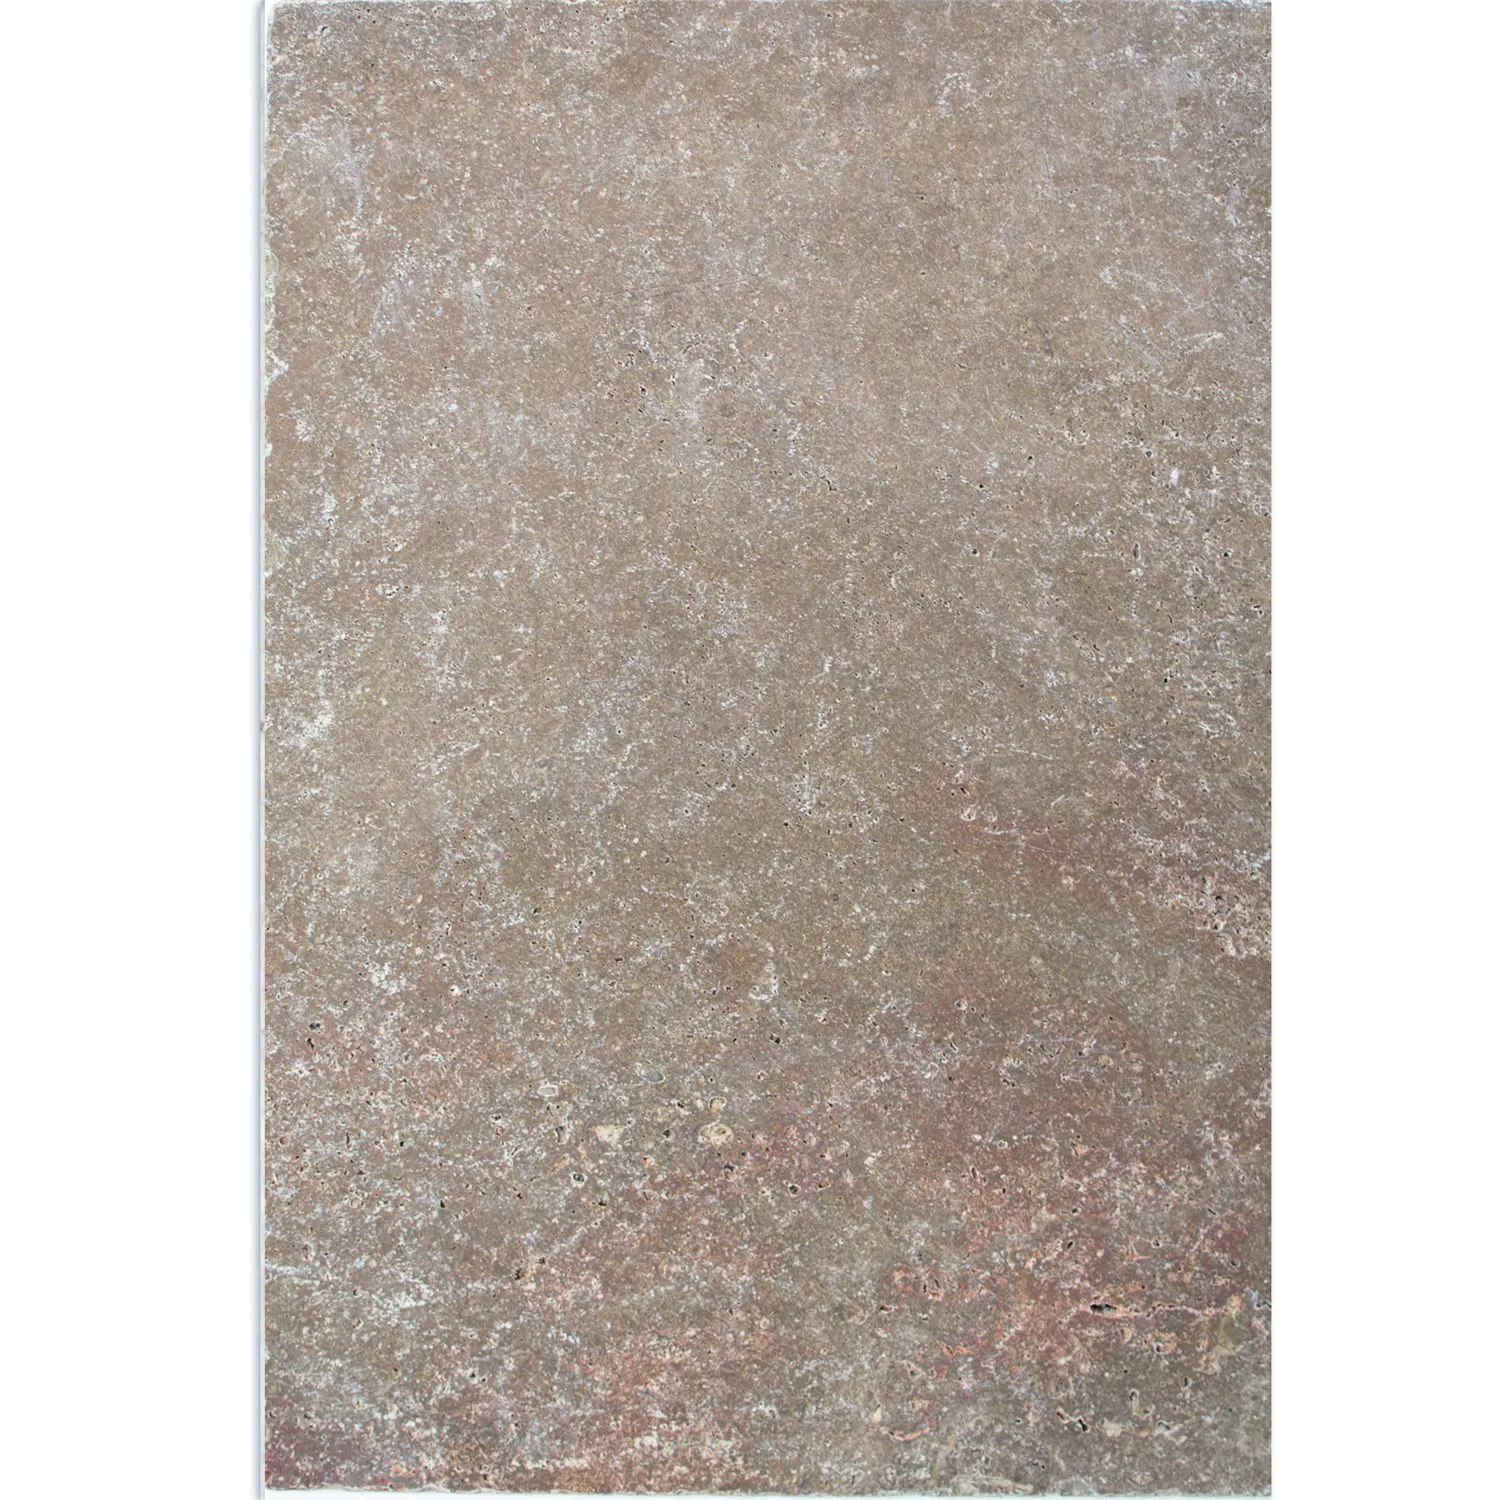 Pločice Od Prirodnog Kamena Travertin Patara Noce 40,6x61cm